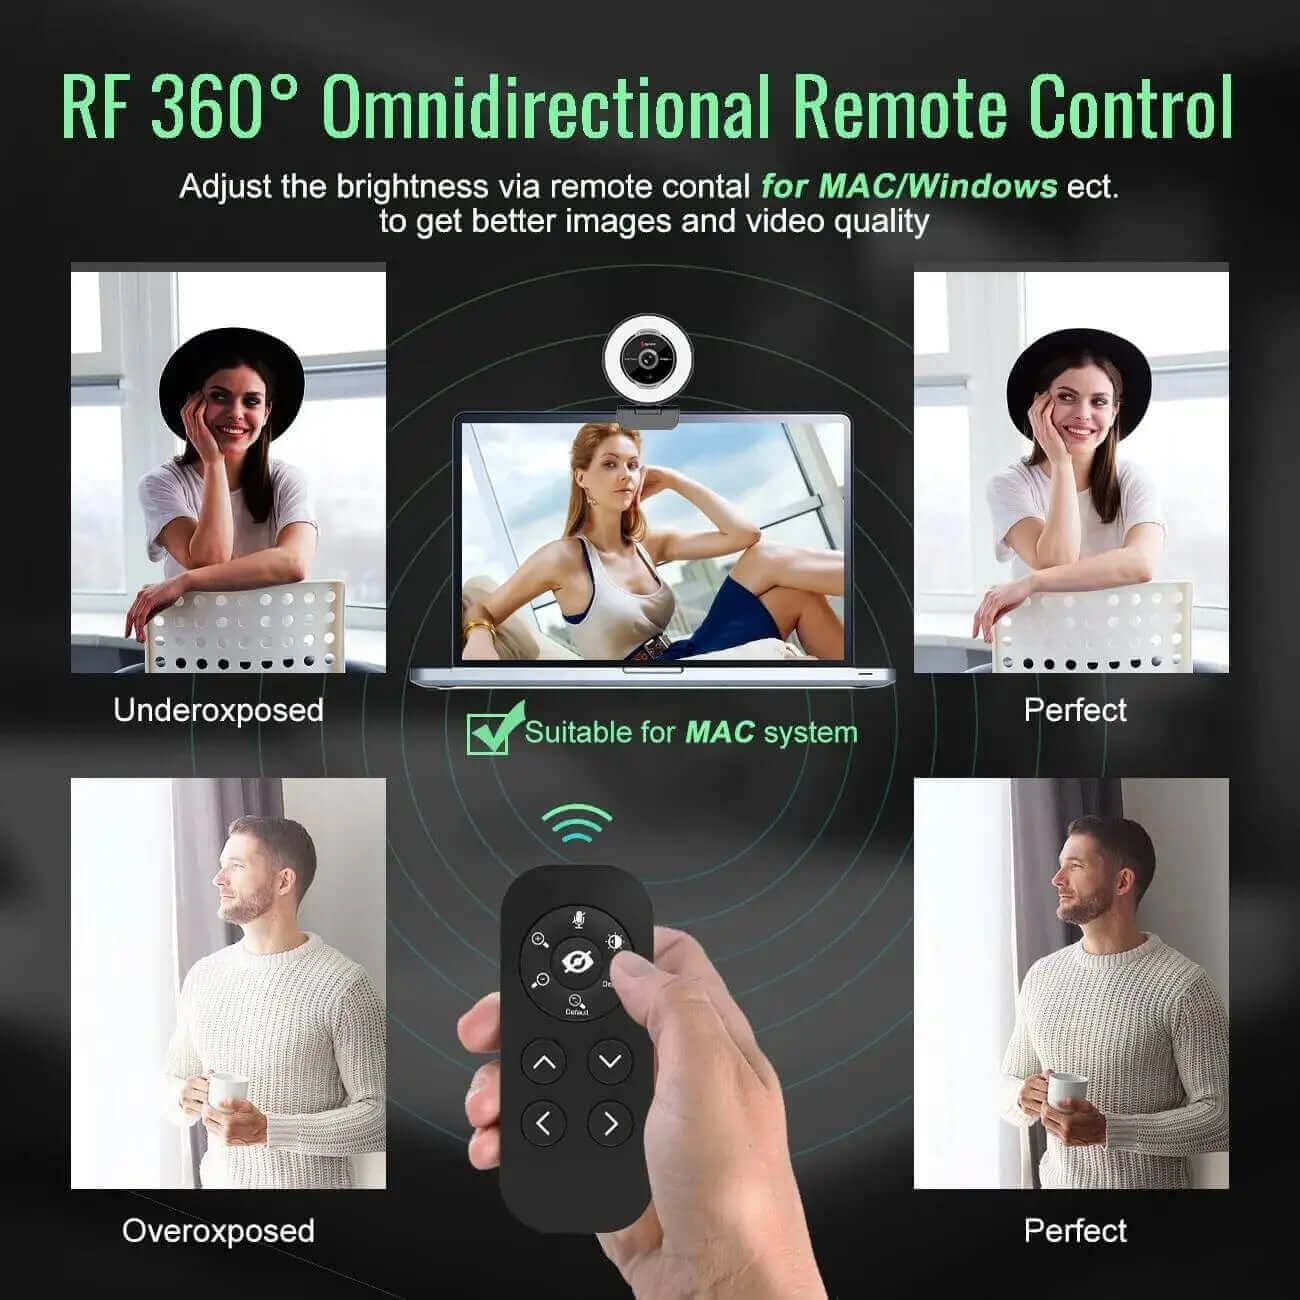 RF 360° Omnidirectional Remote Control